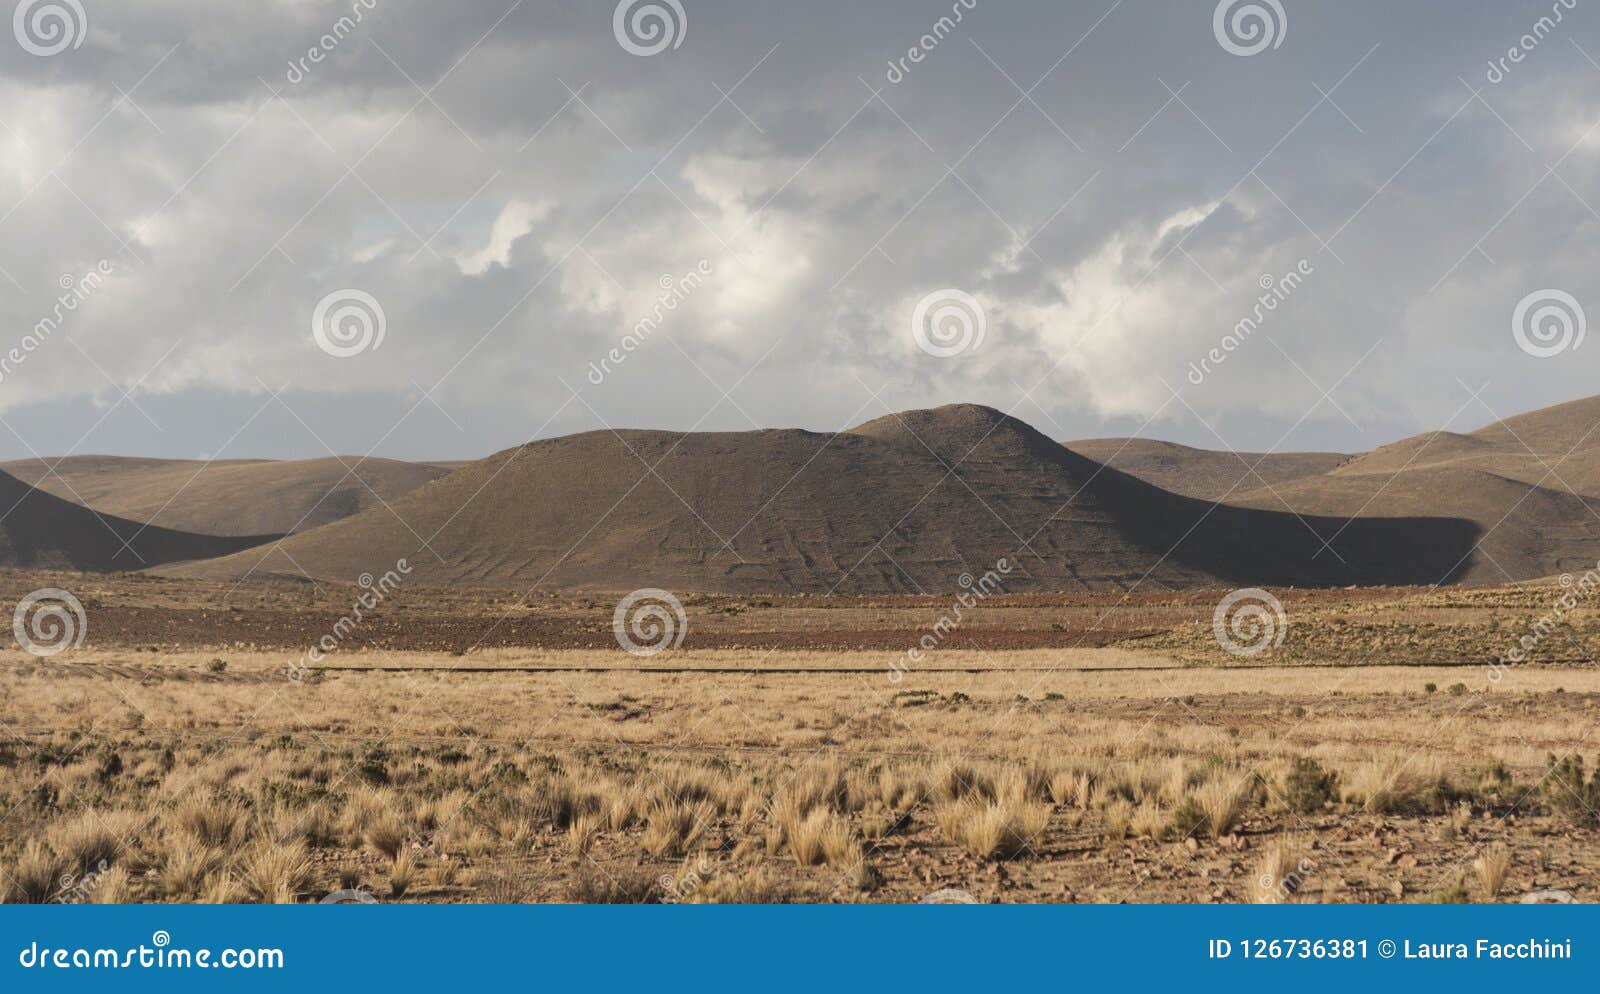 the beautiful landscape of bolivia along the road to la paz, bolivia